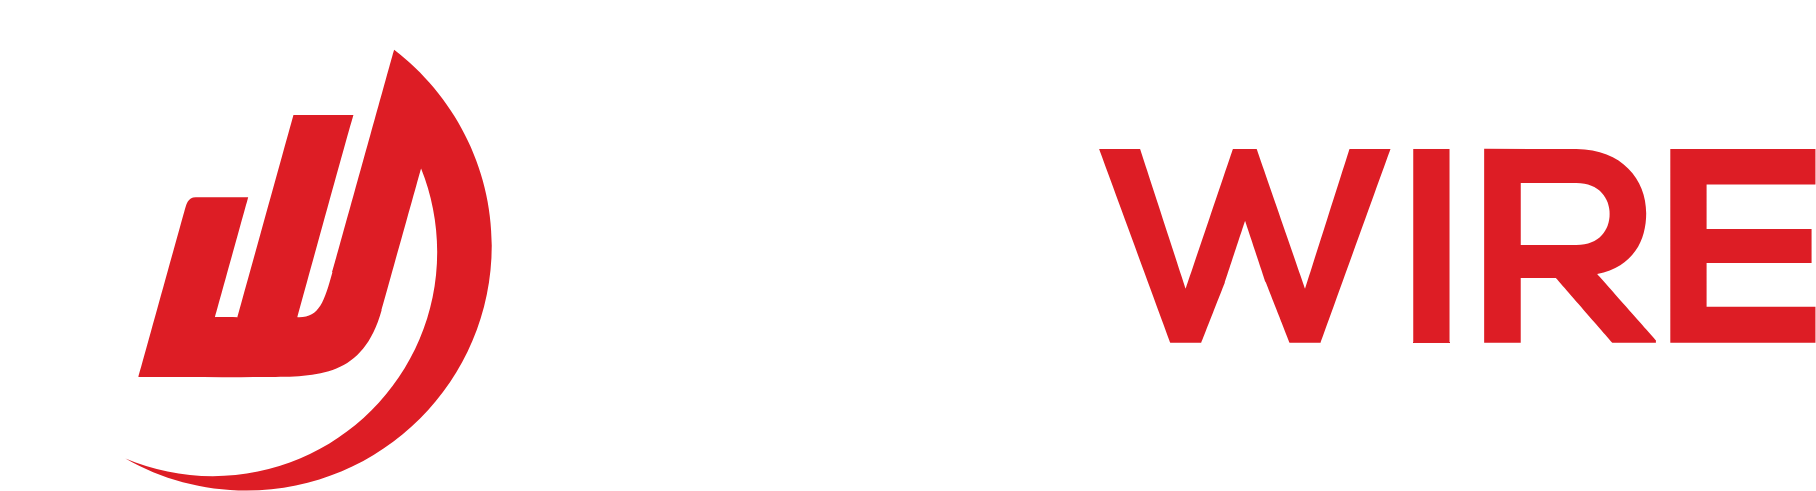 Redwire logo large for dark backgrounds (transparent PNG)